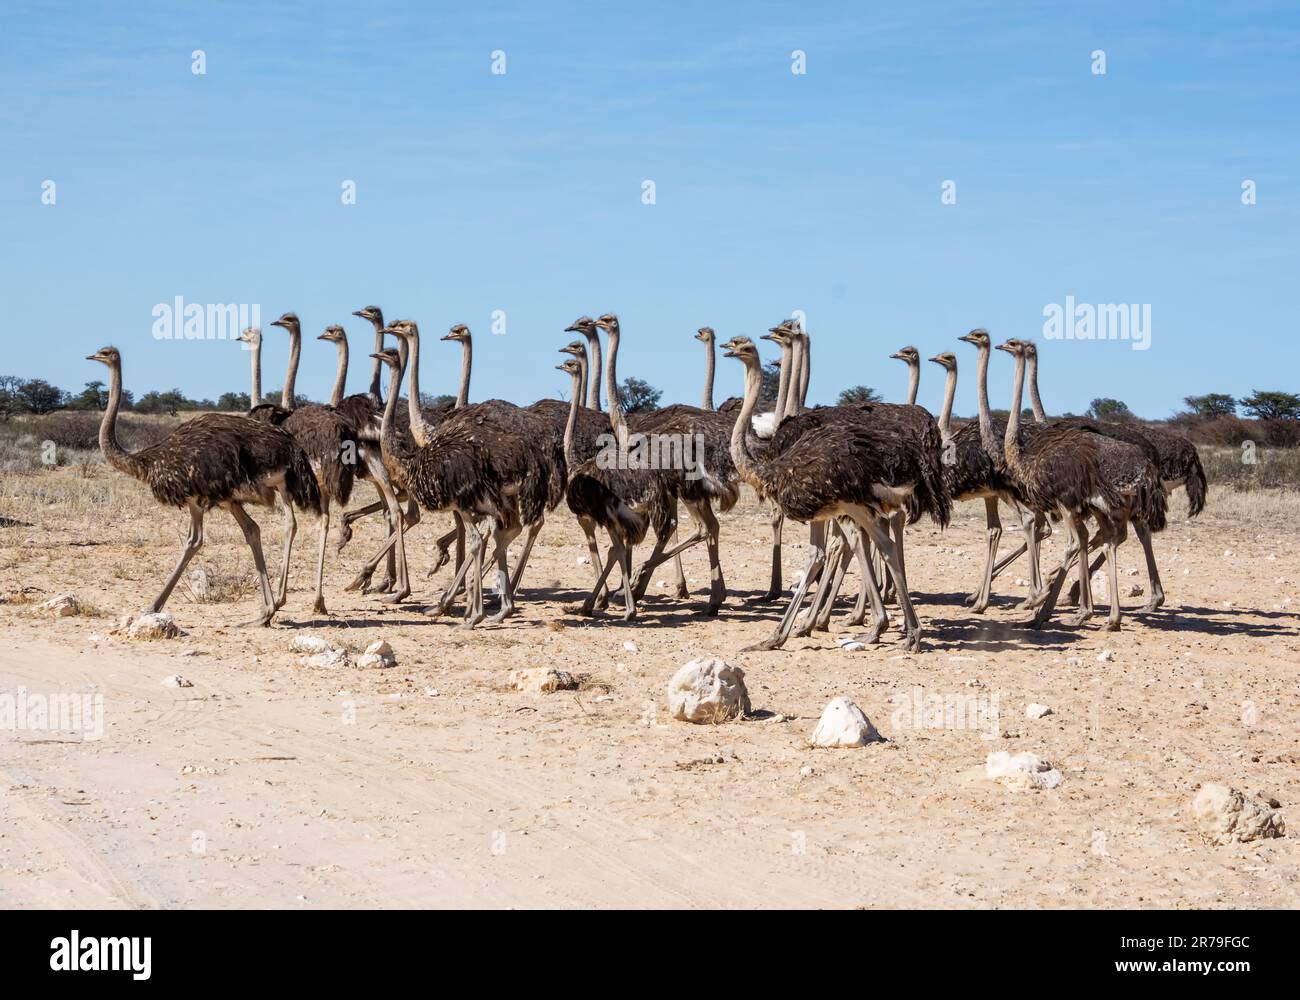 A group of Ostrich in Southern African Kalahari savannah Stock Photo